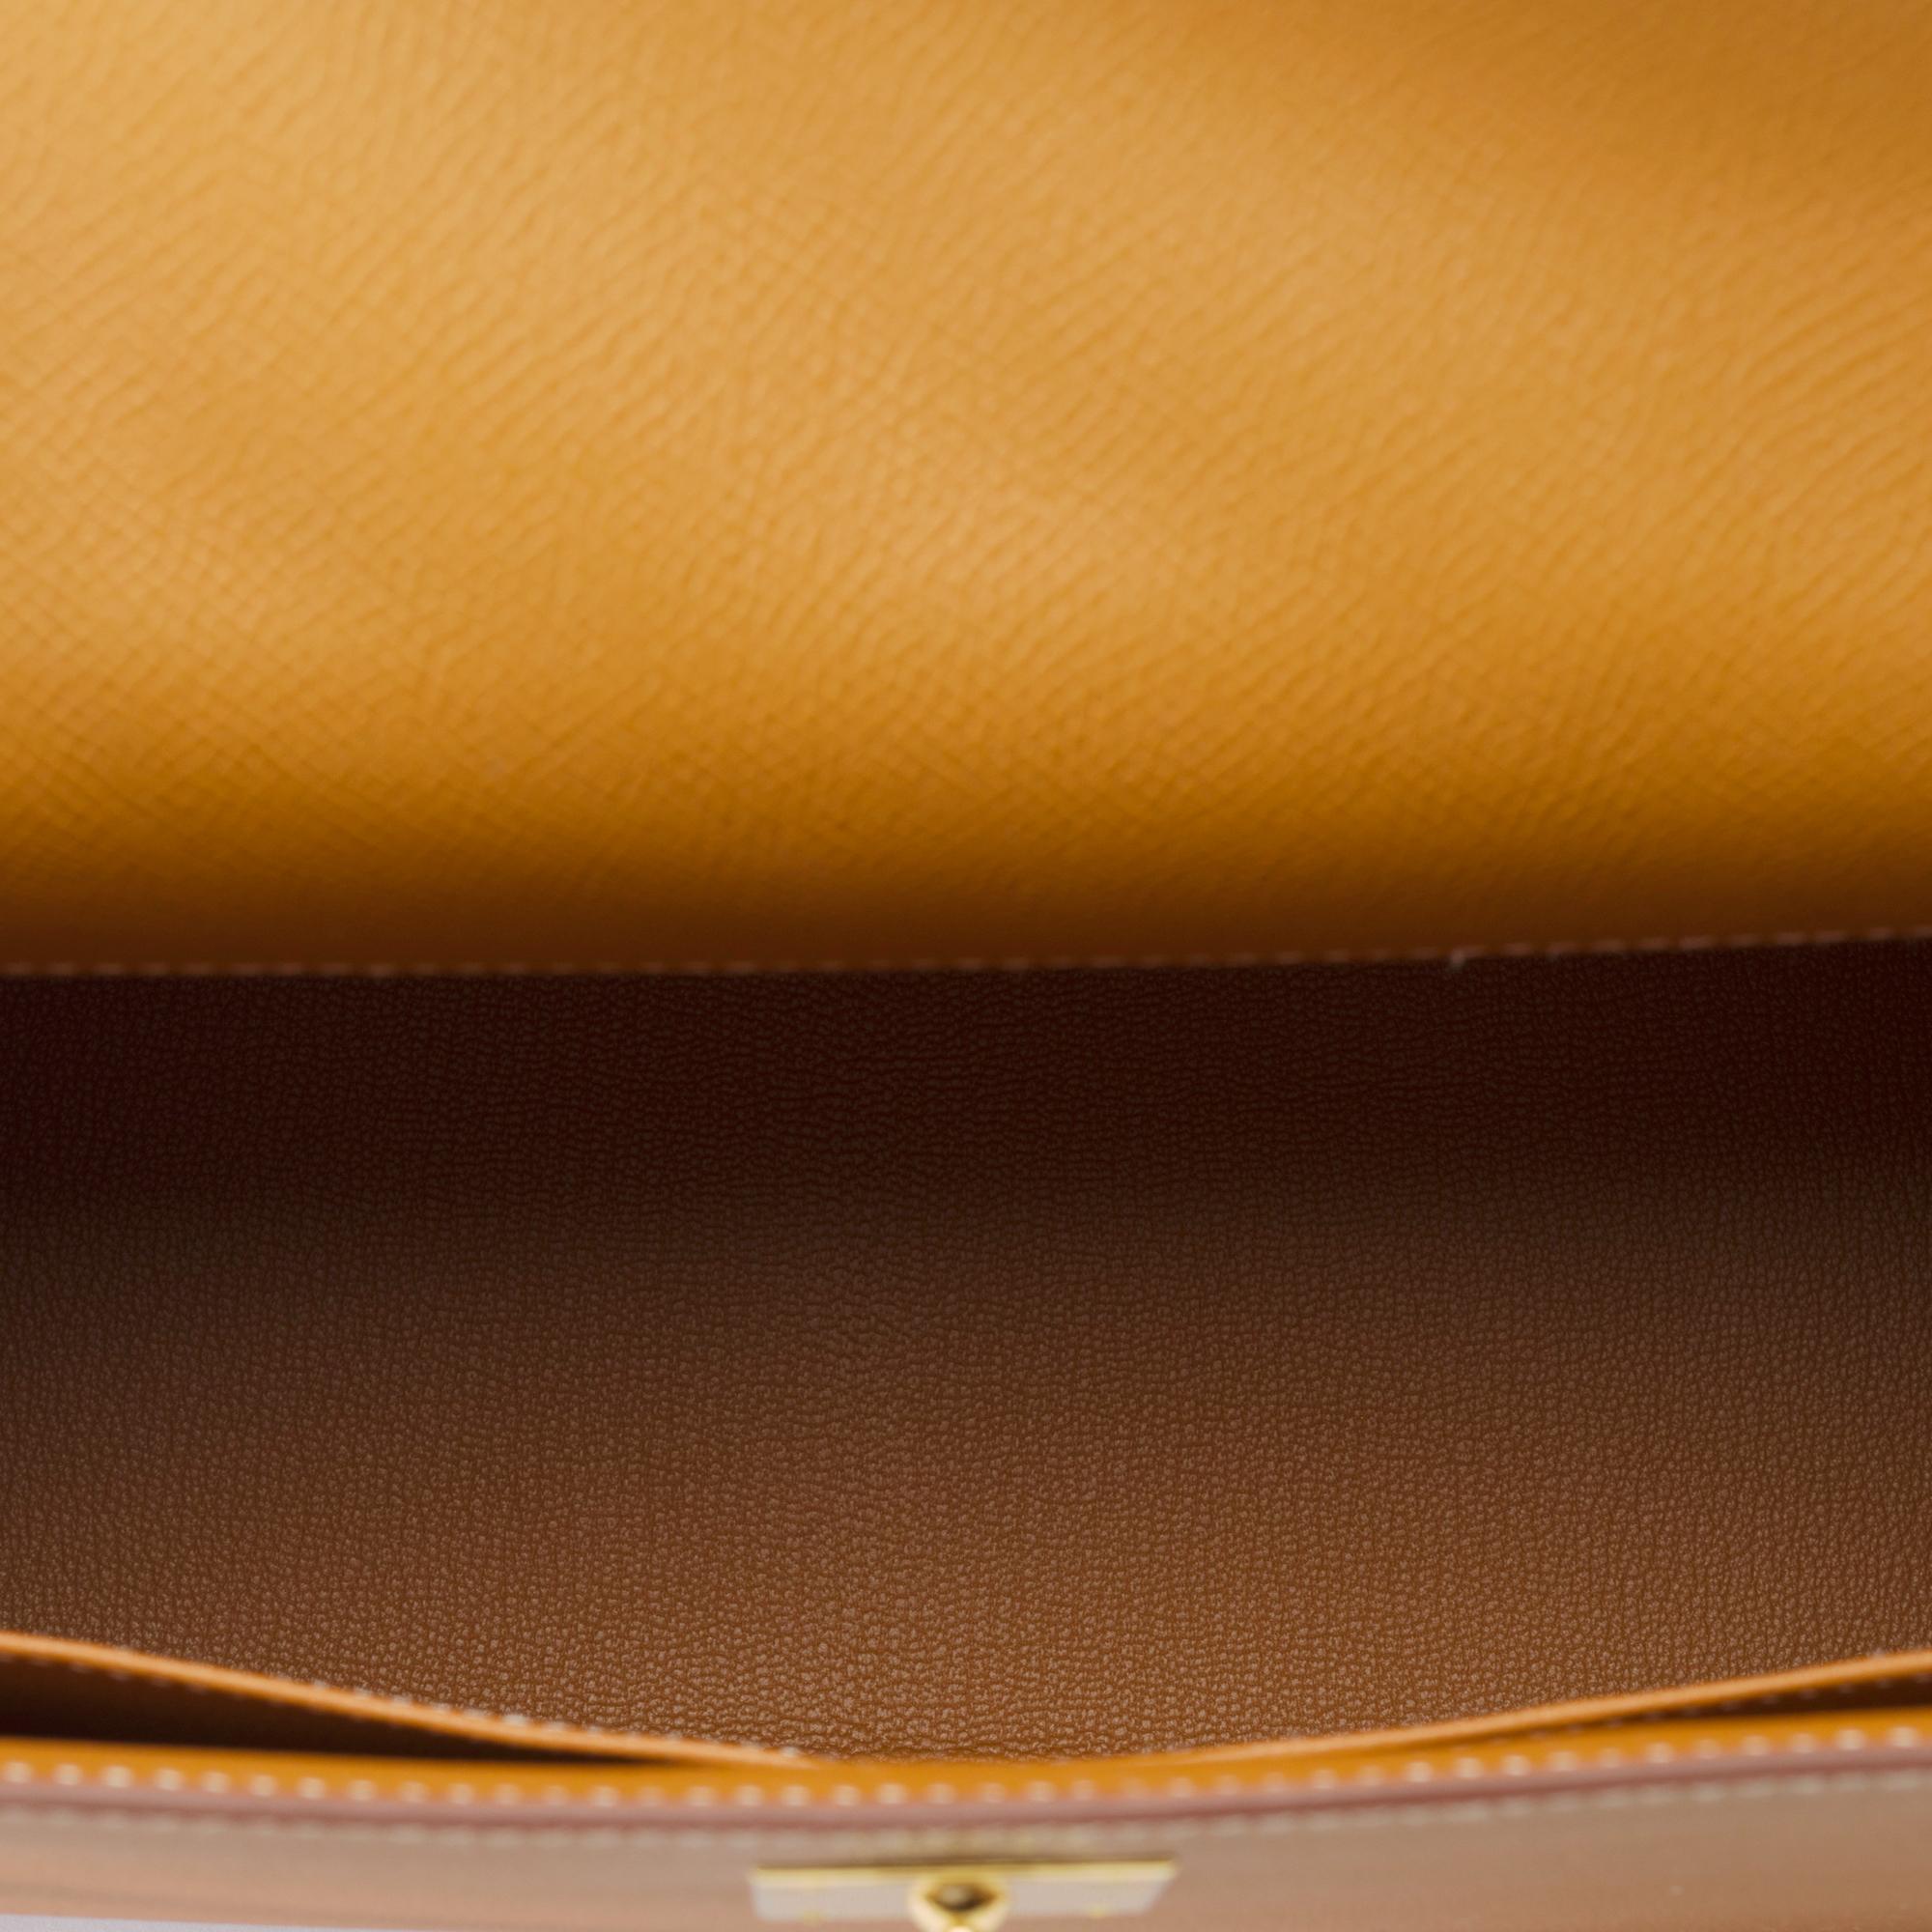 New Hermès Kelly 32 sellier handbag strap in Camel Epsom calf leather, GHW For Sale 5